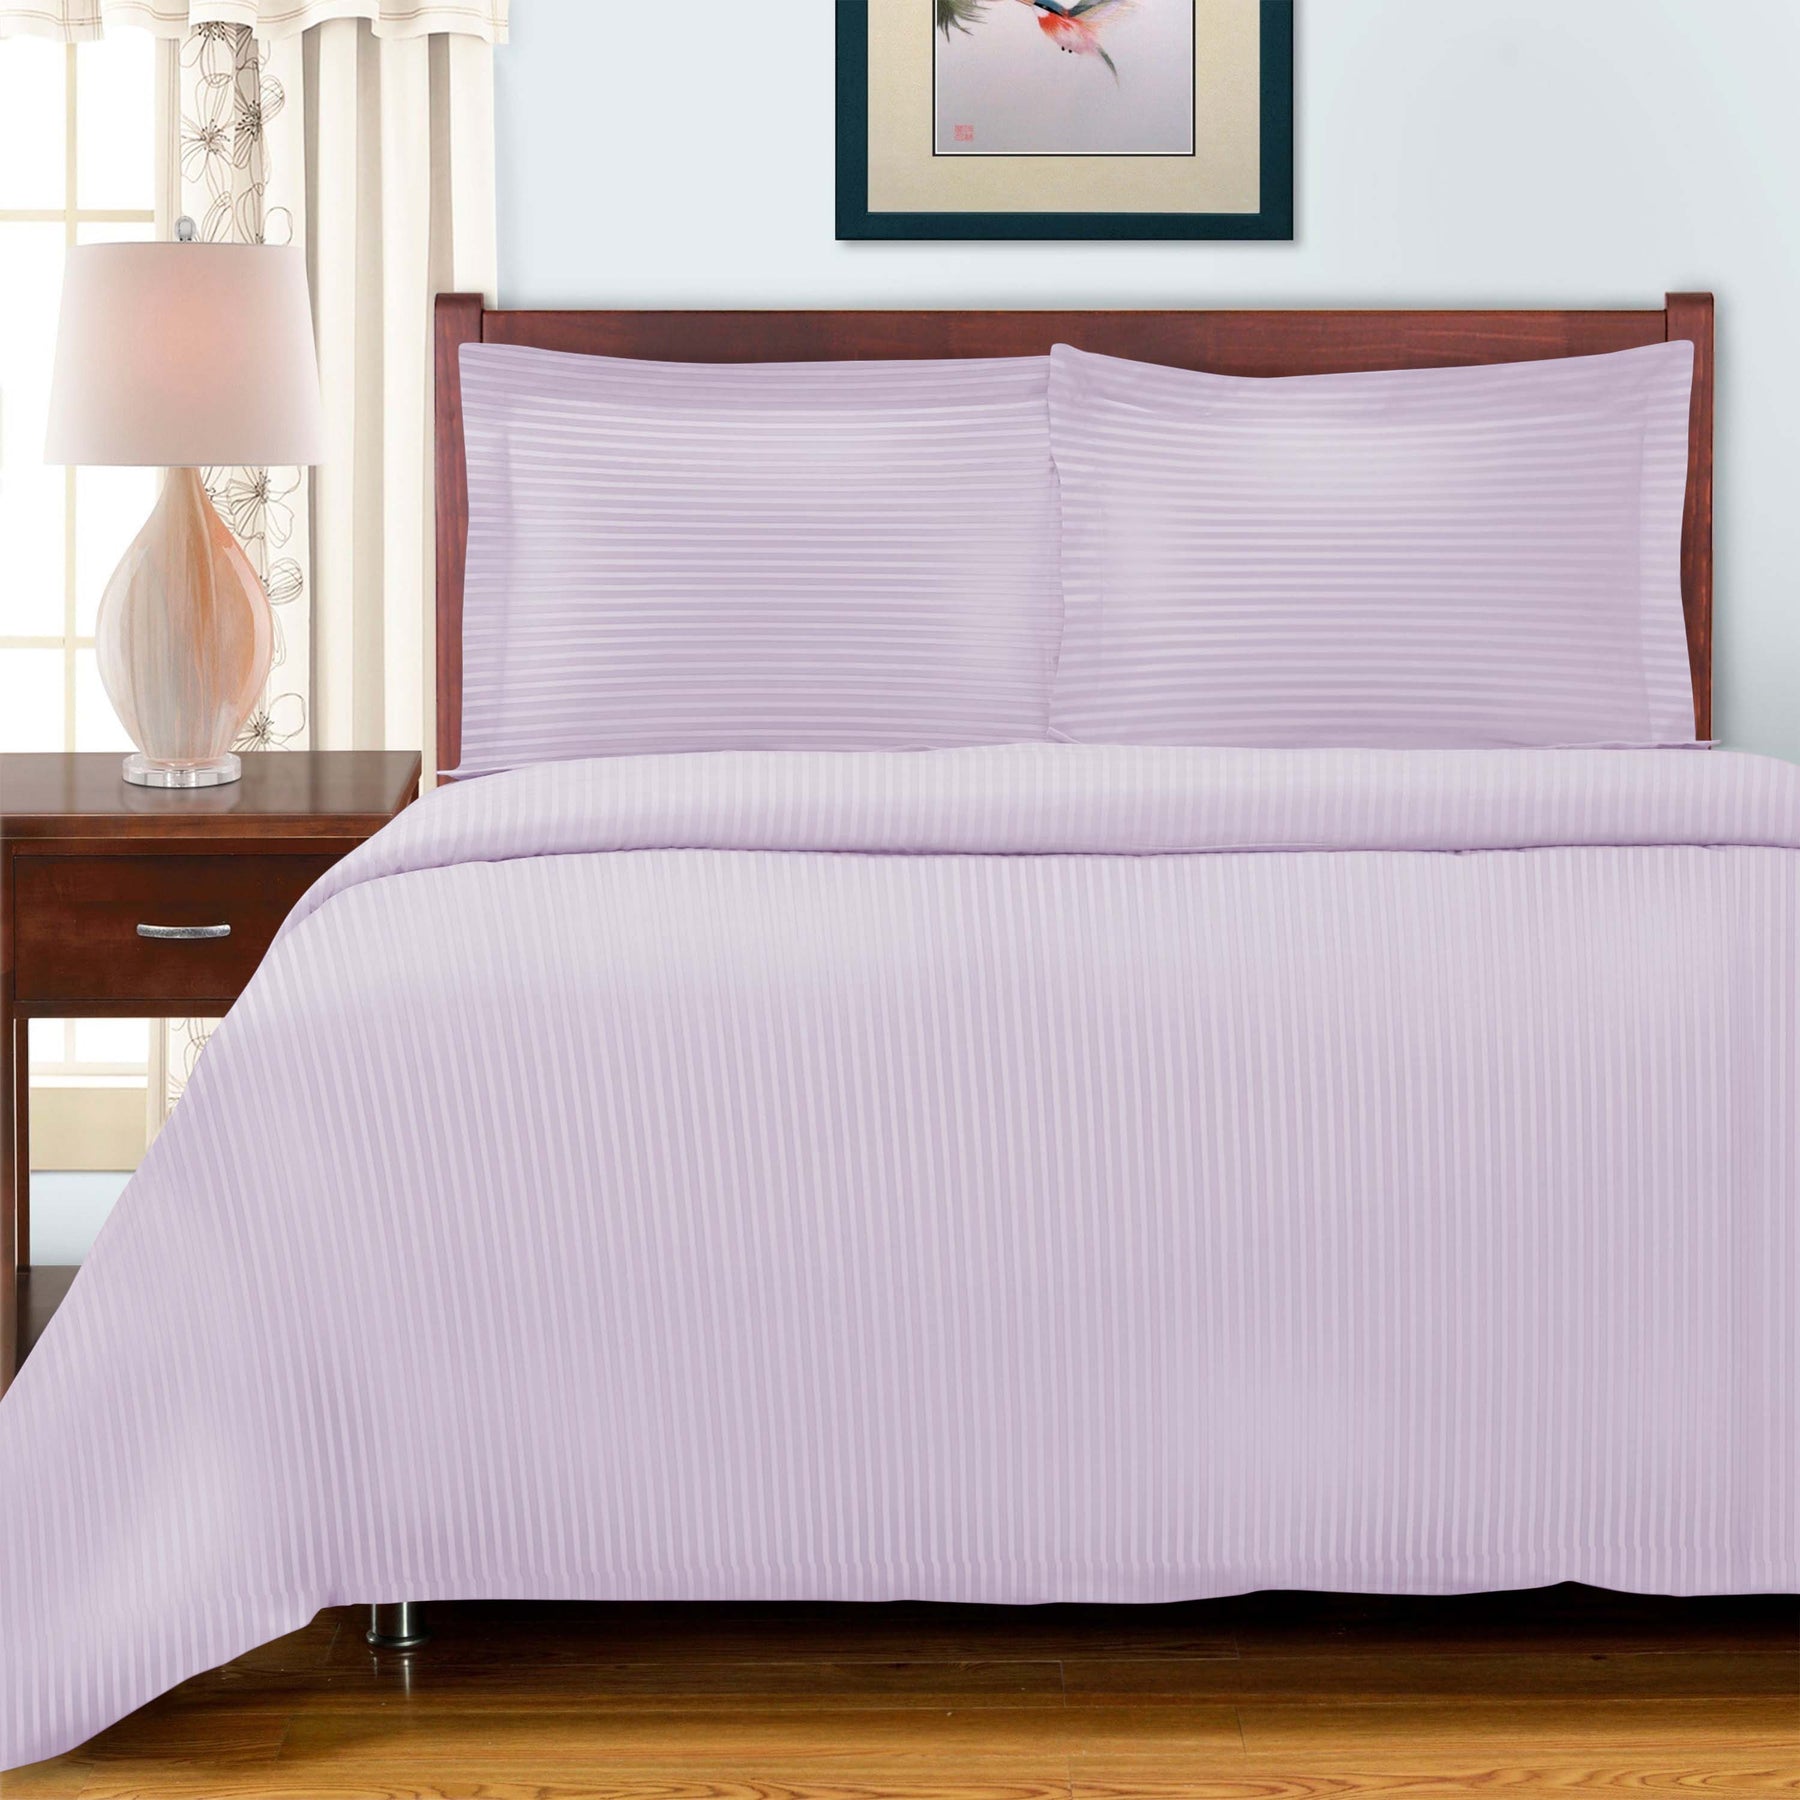 Superior Premium 600 Thread Count Egyptian Cotton Solid Duvet Cover Set - Lavender